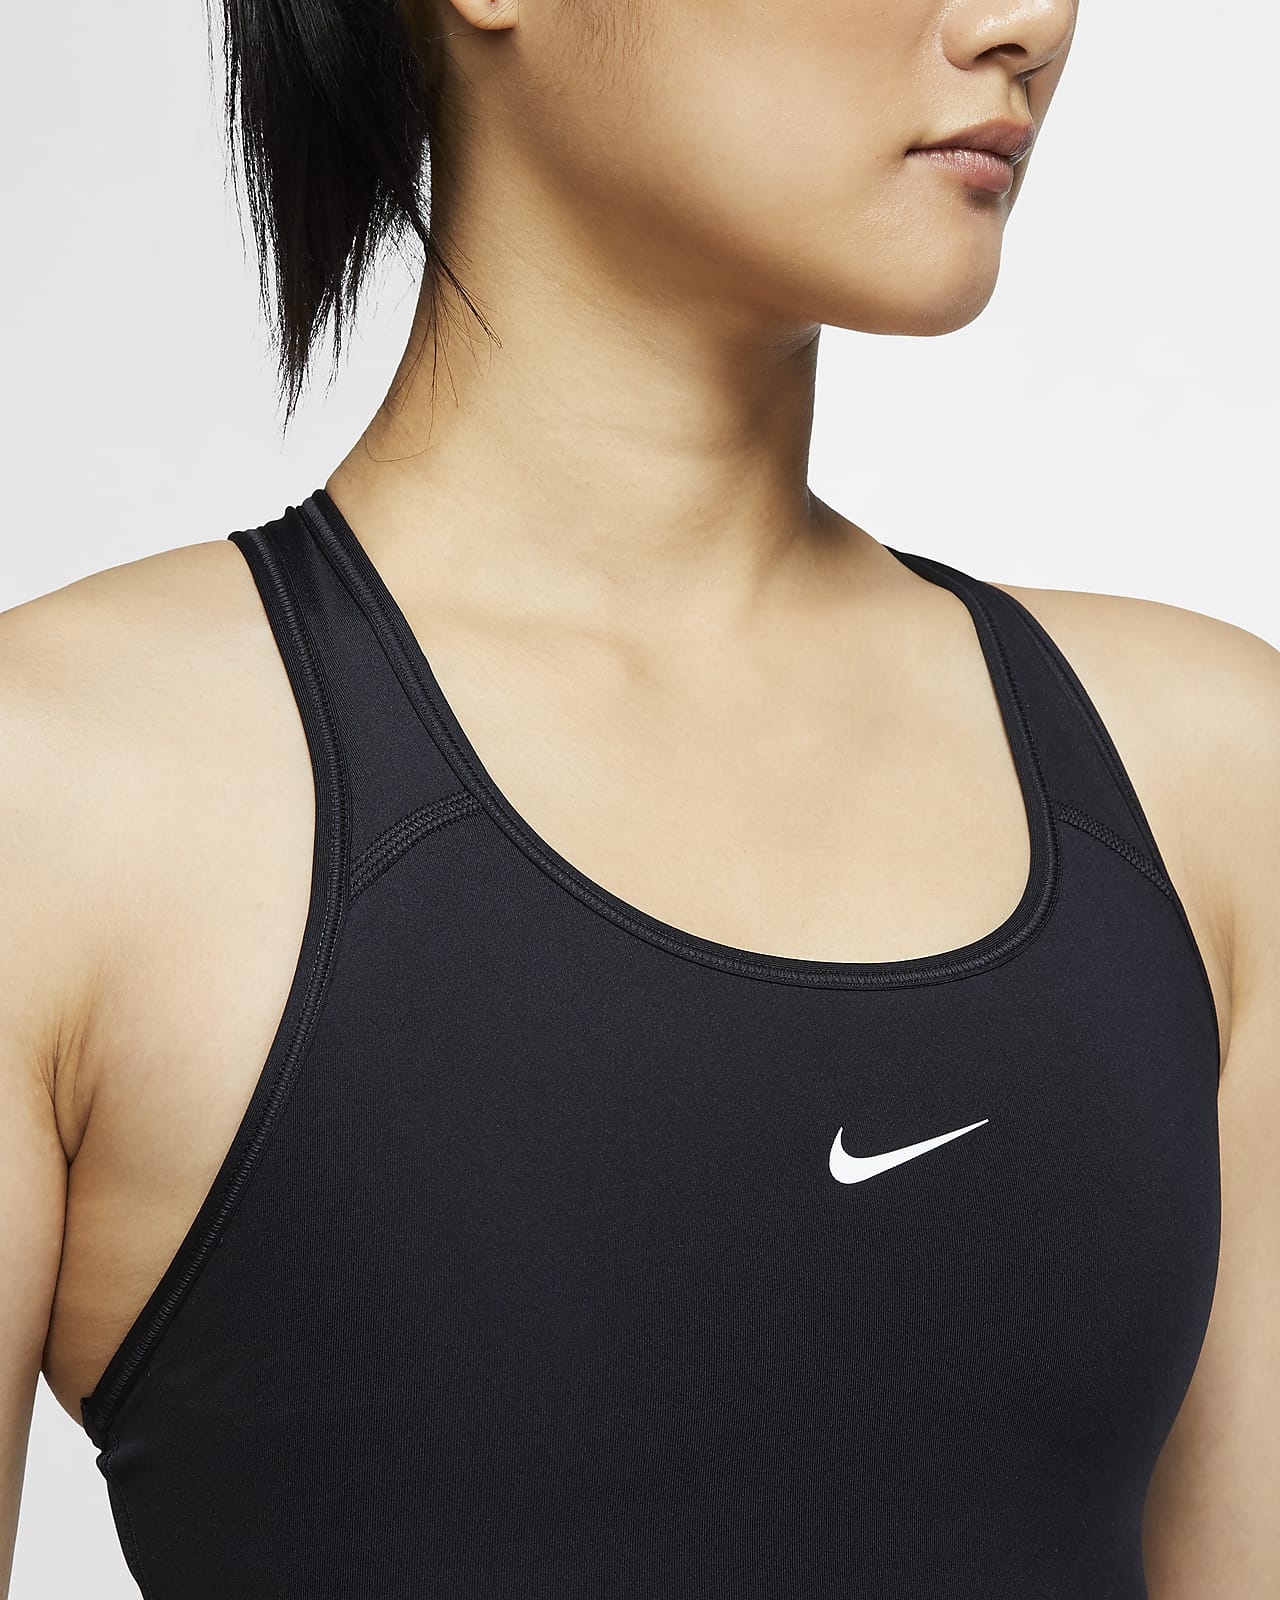 Women's bra Nike Swoosh Bra Pad - doll /white, Tennis Zone